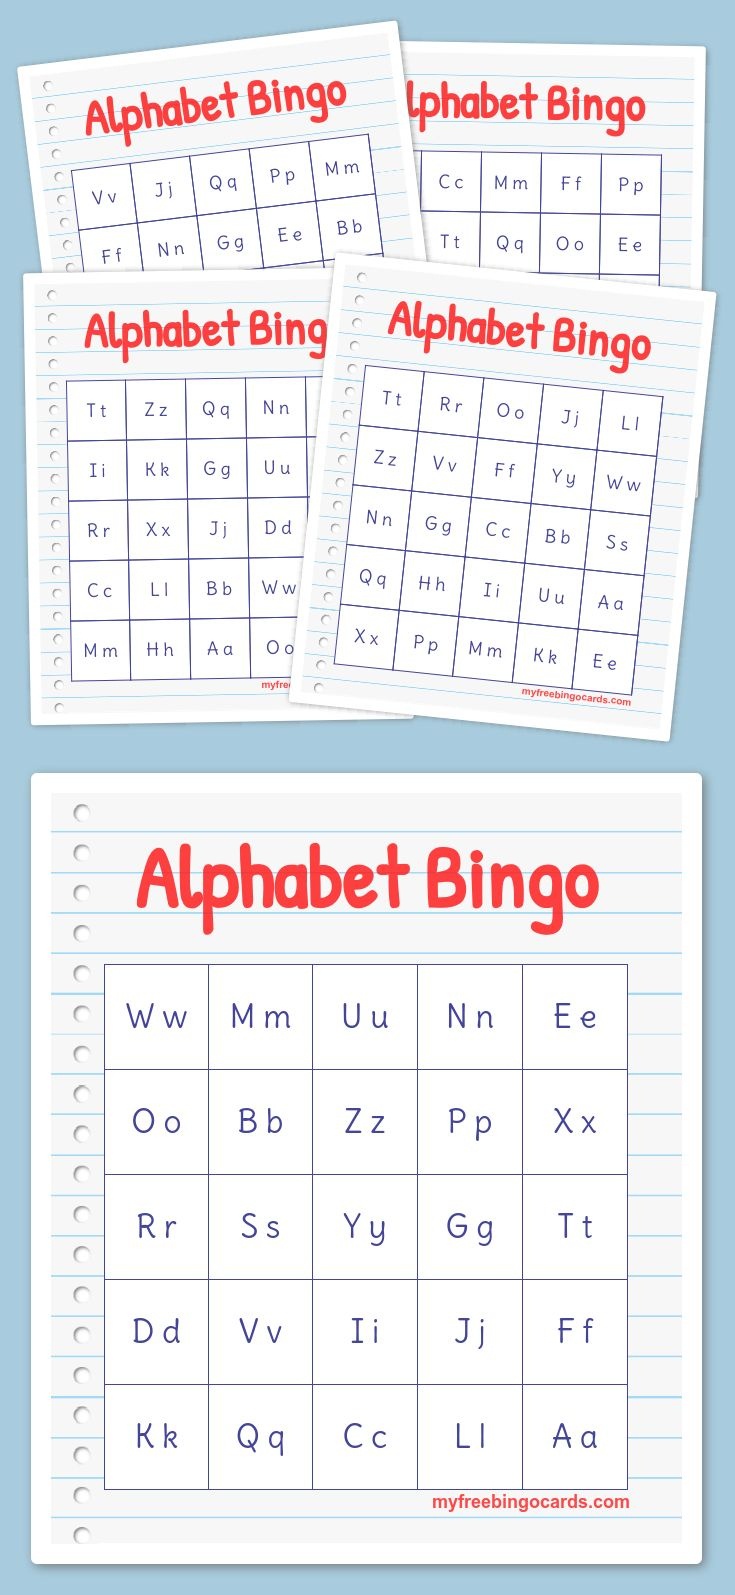 Myfreebingocards | Tubidportal - Free Printable Bingo Cards 1 75